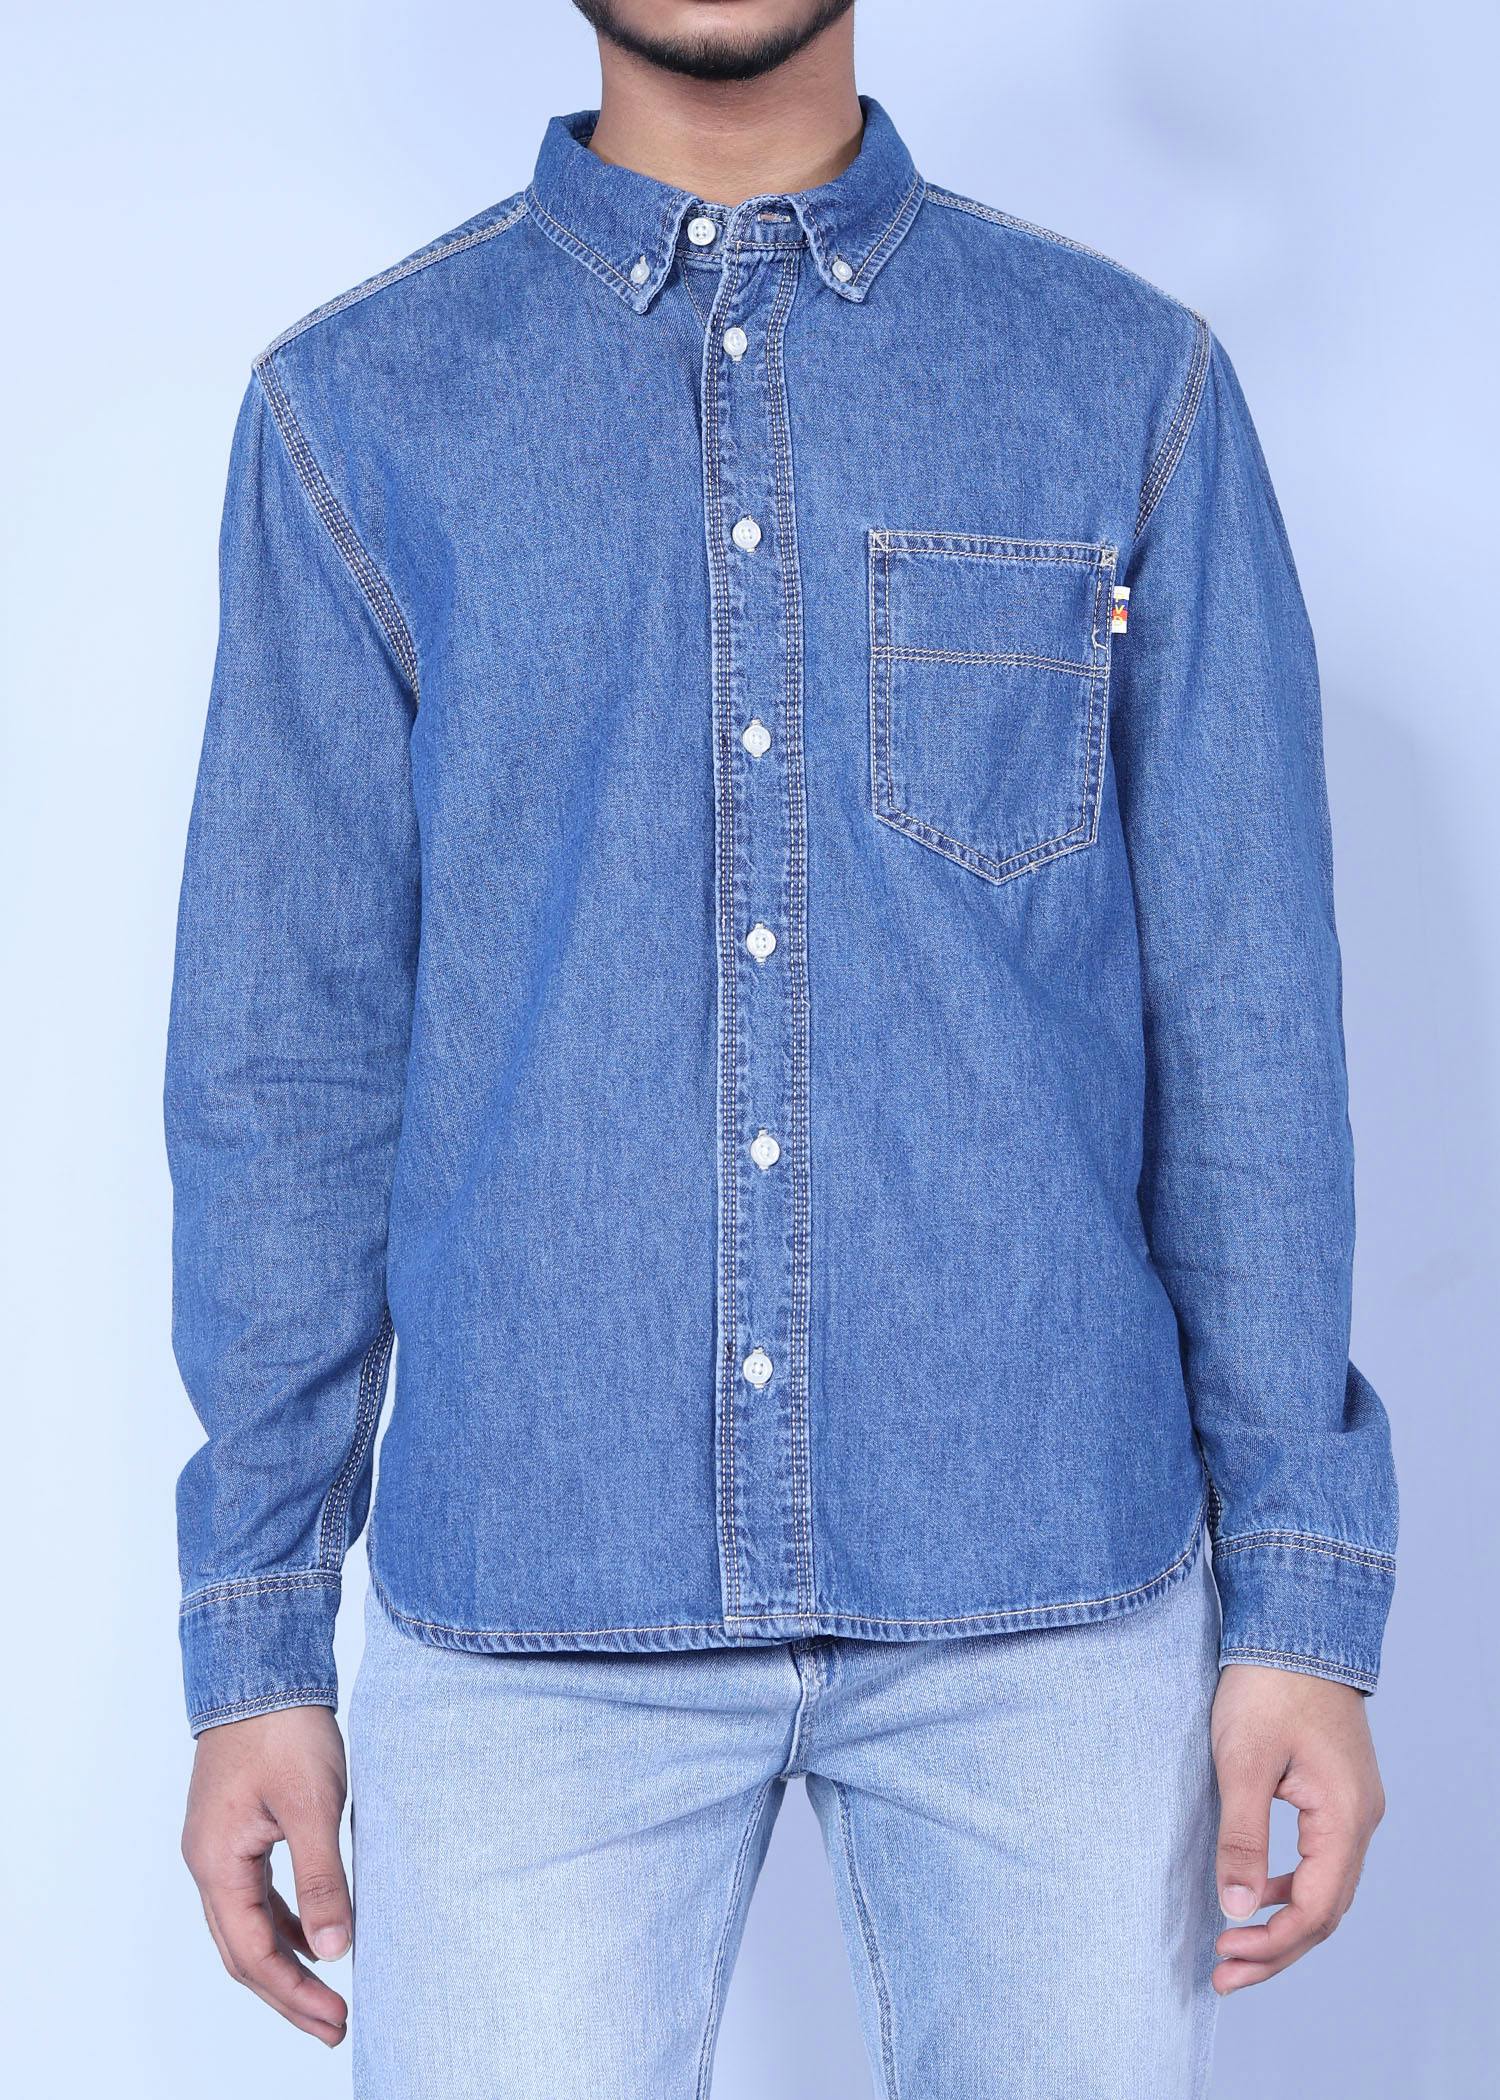 corsica v denim shirt mid blue color half front view